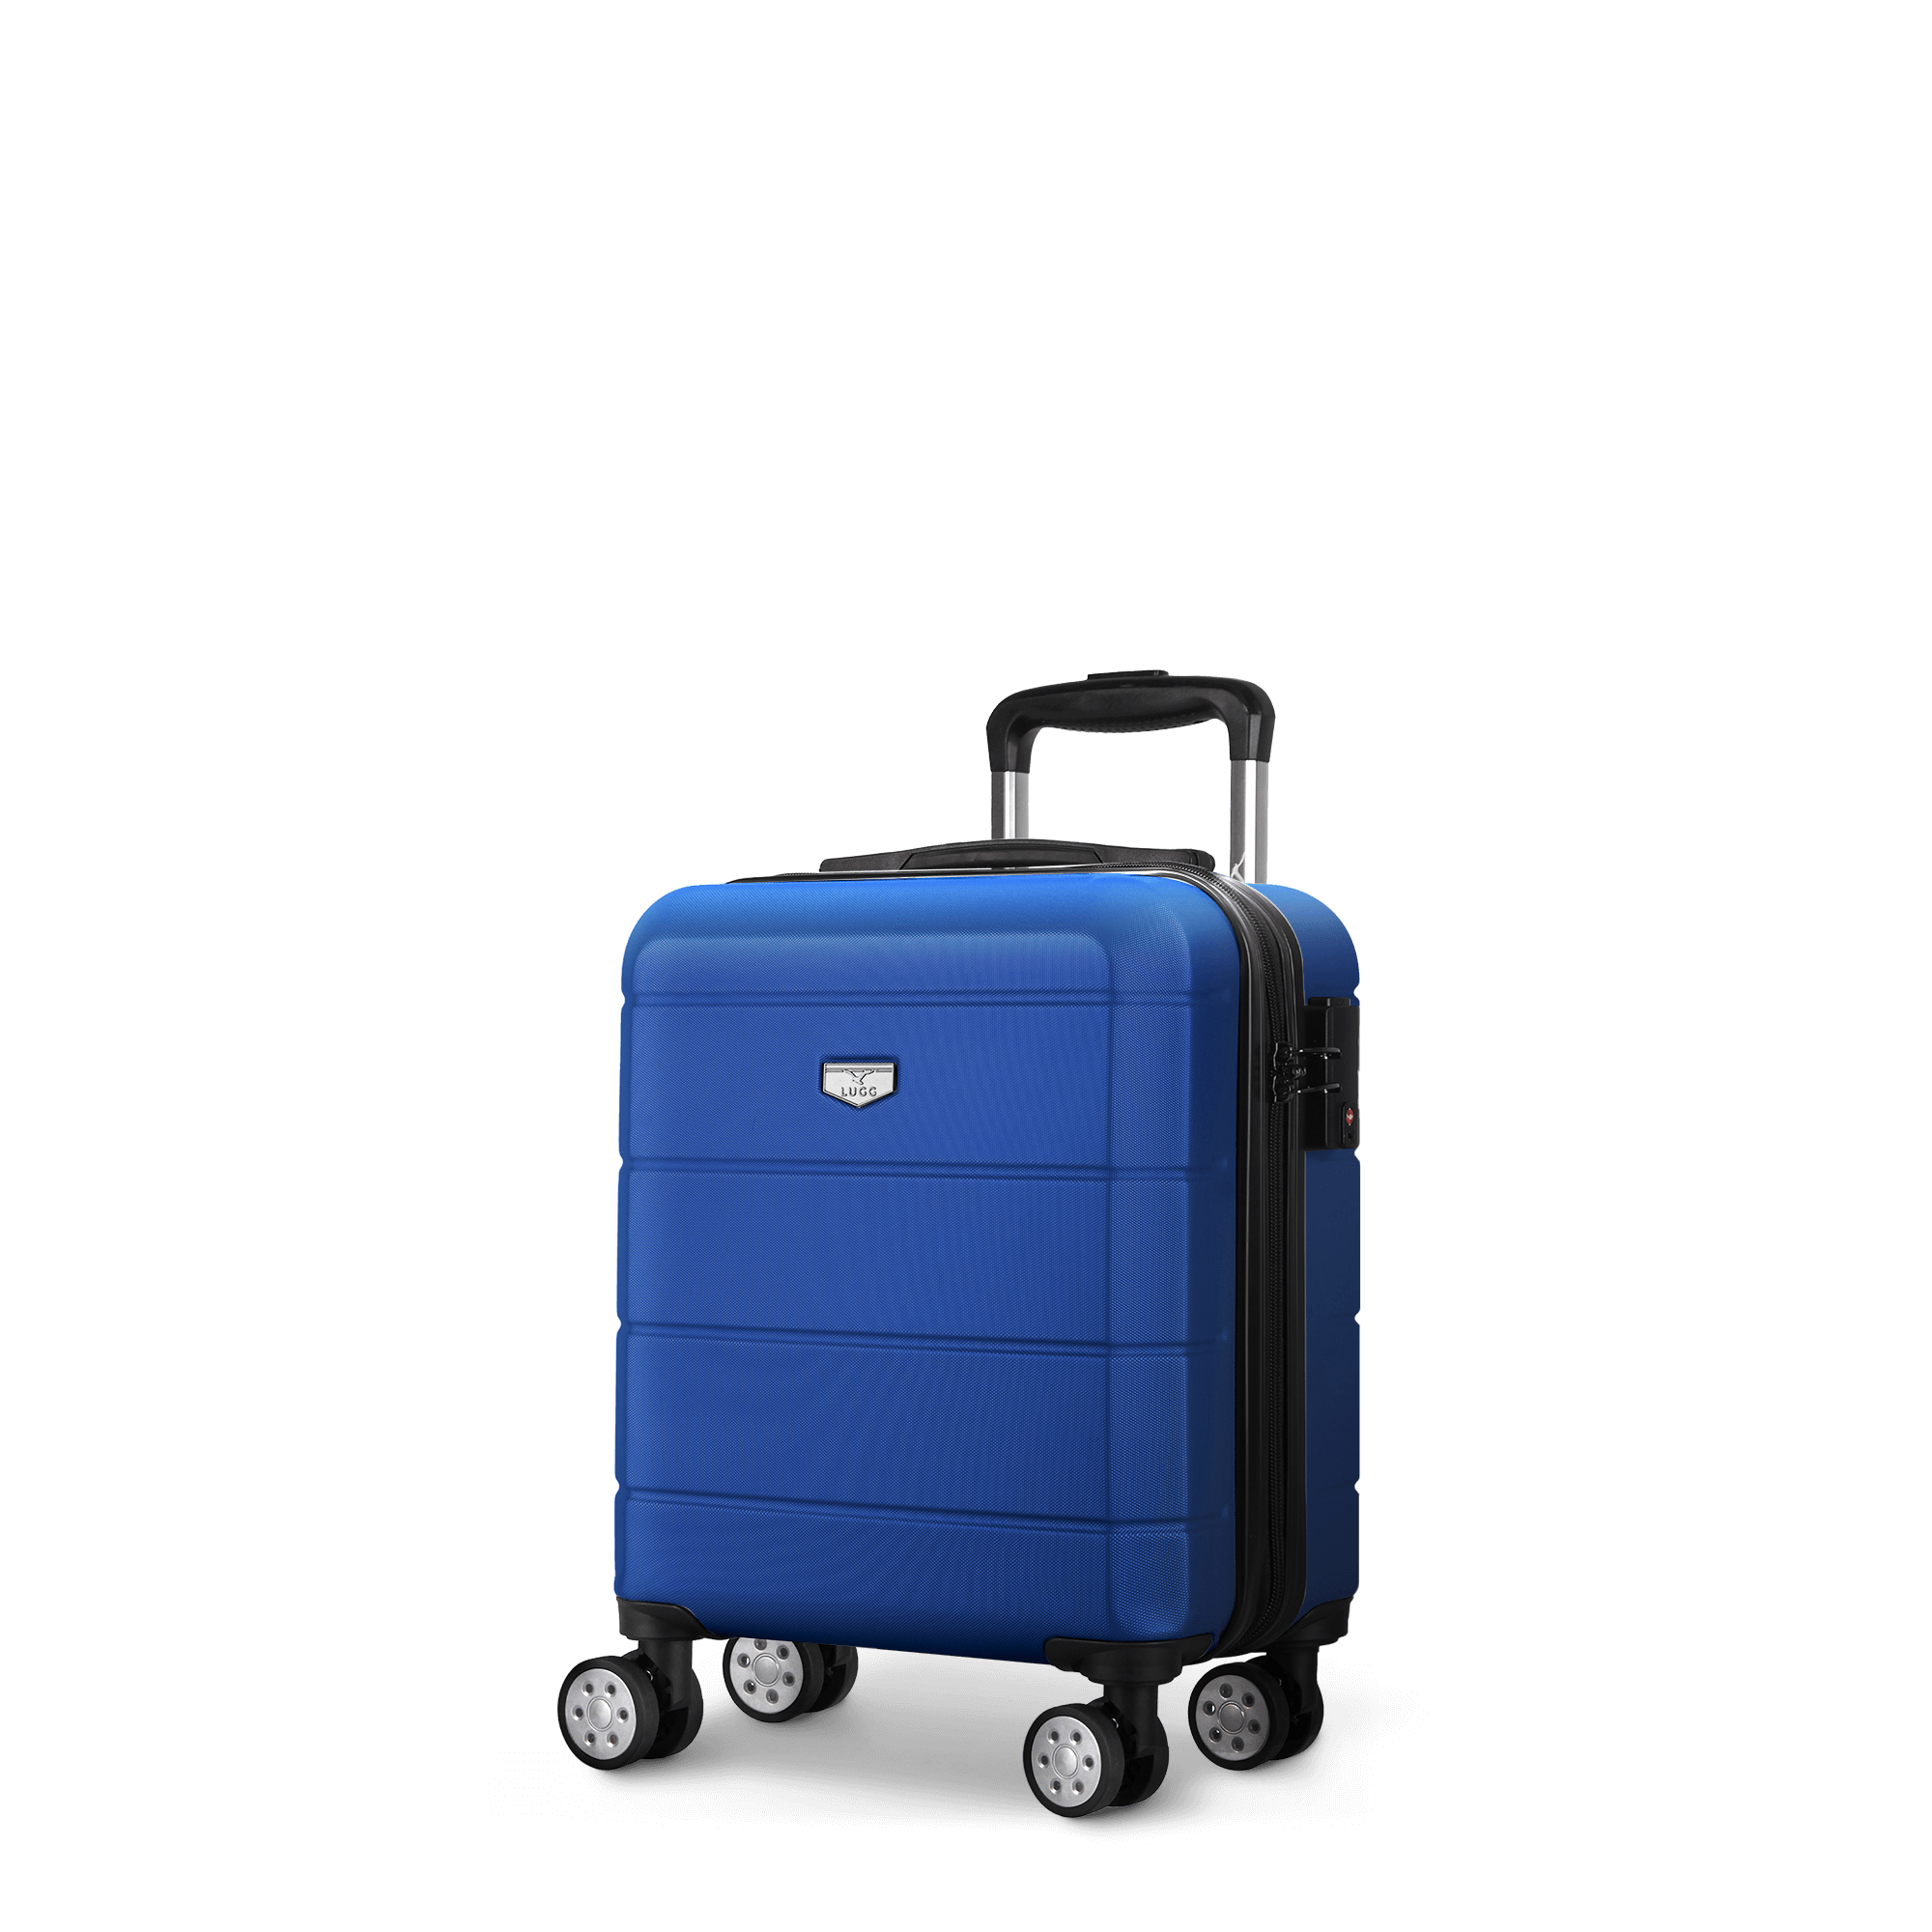 Jetset Cabin Suitcase in Blue